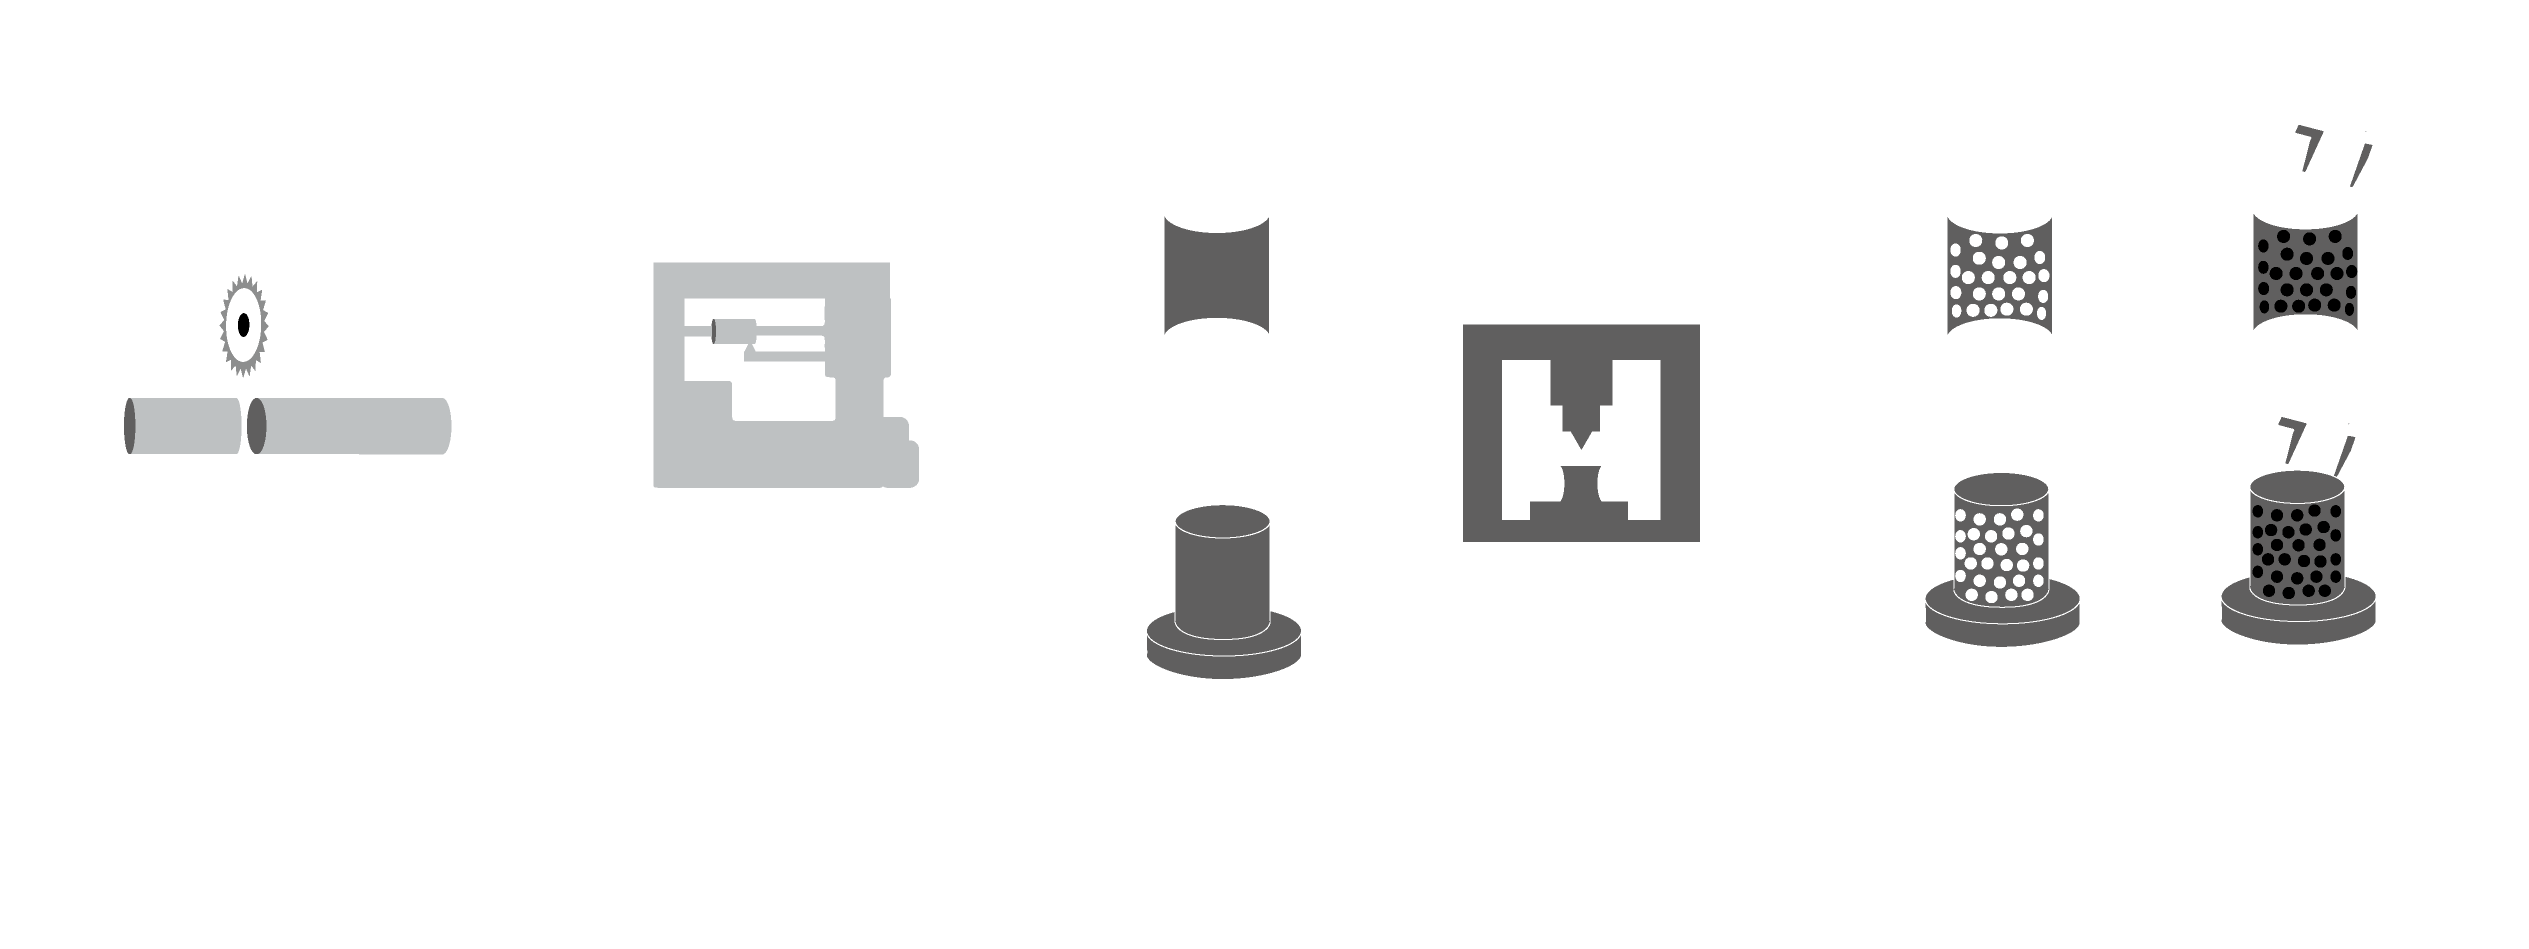 Graphite bearing process production diagram